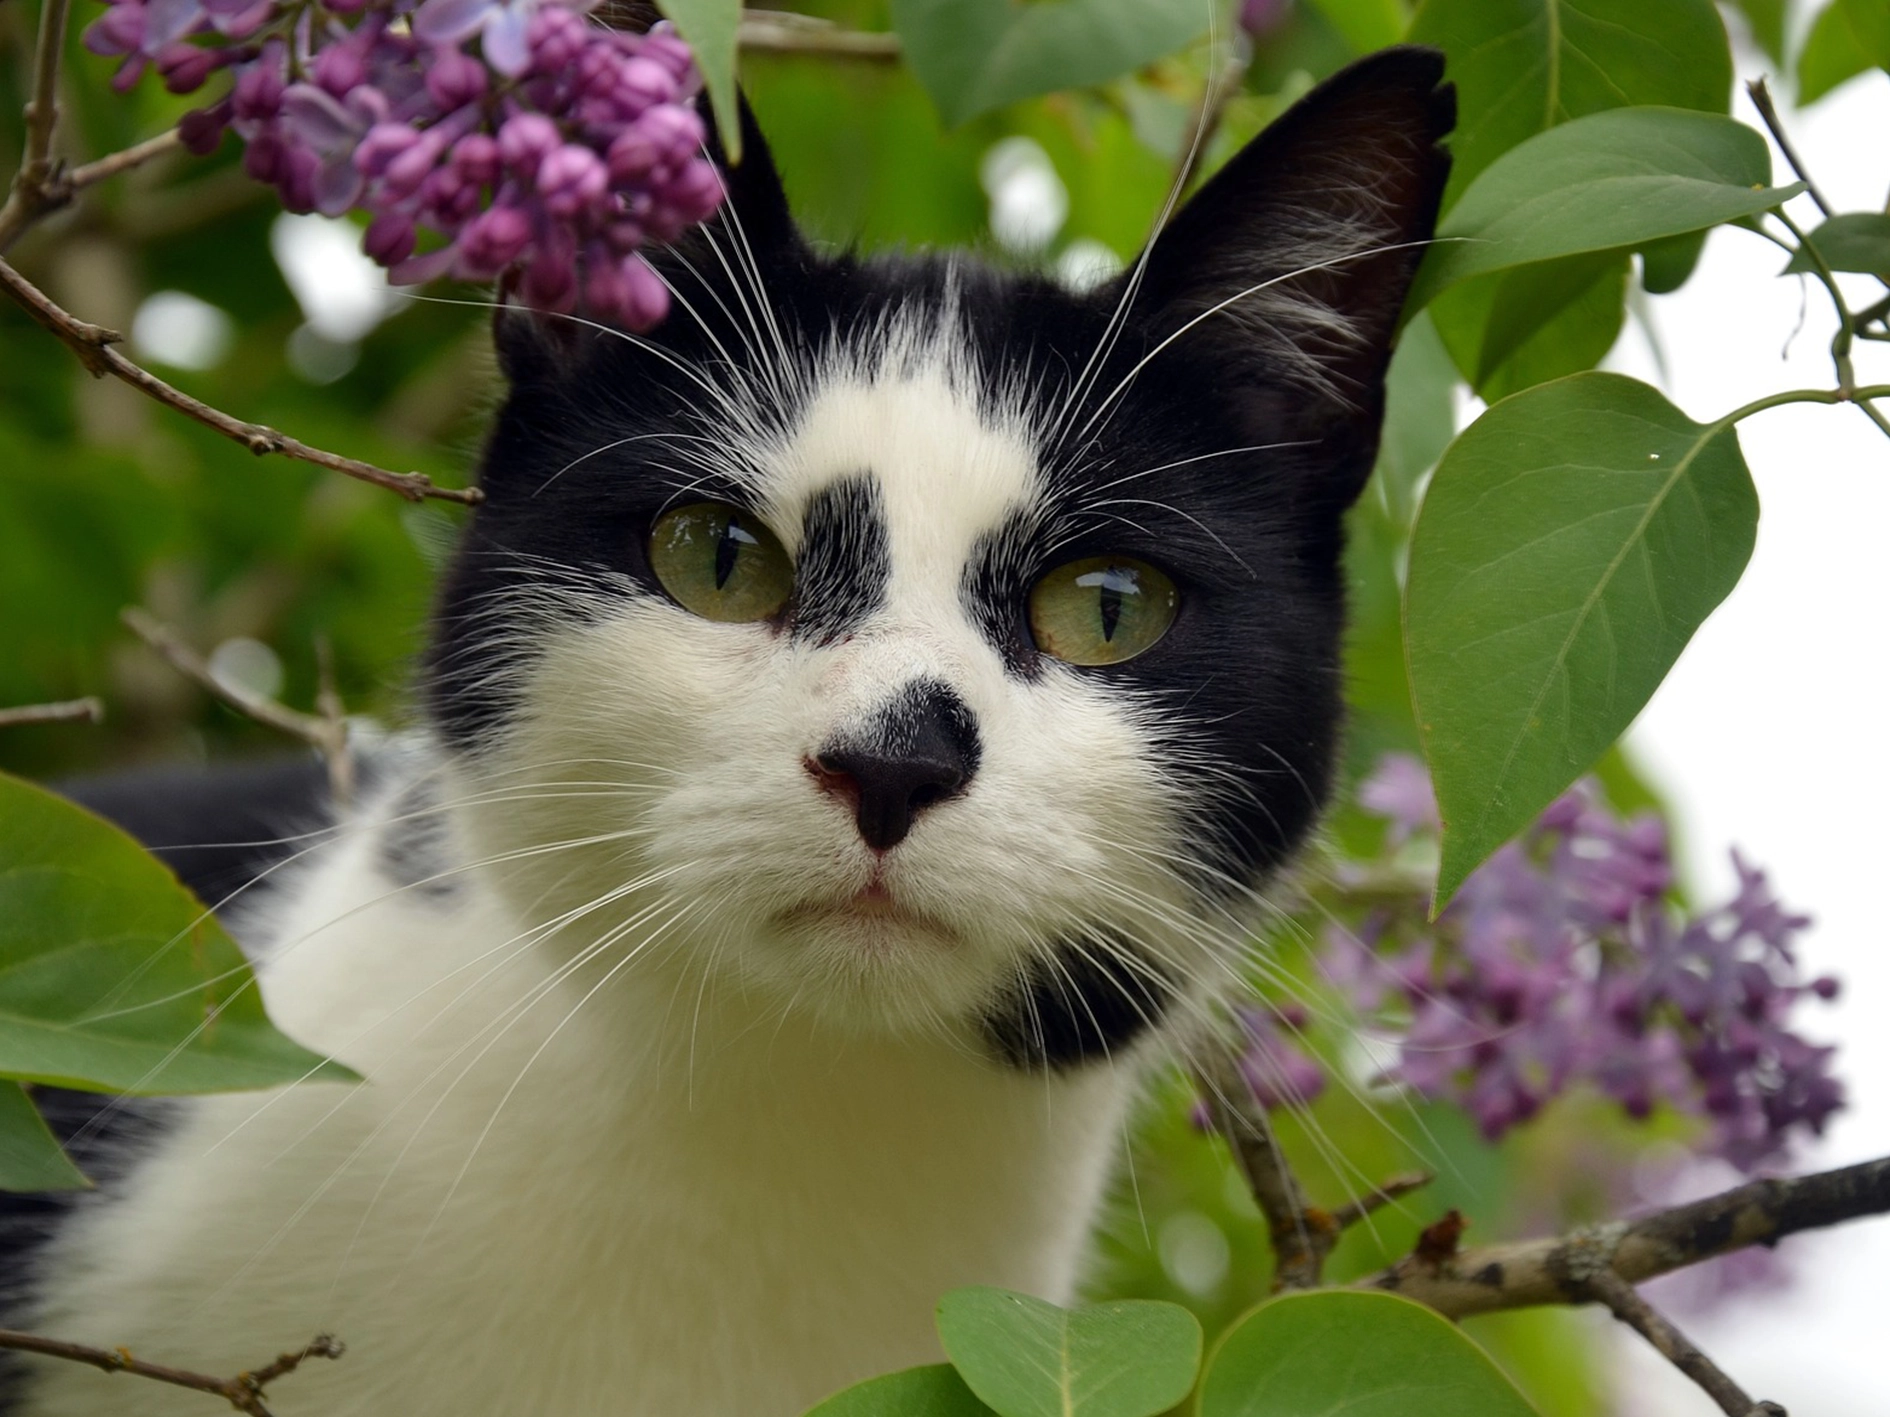 avoiding plants poisonous to cats